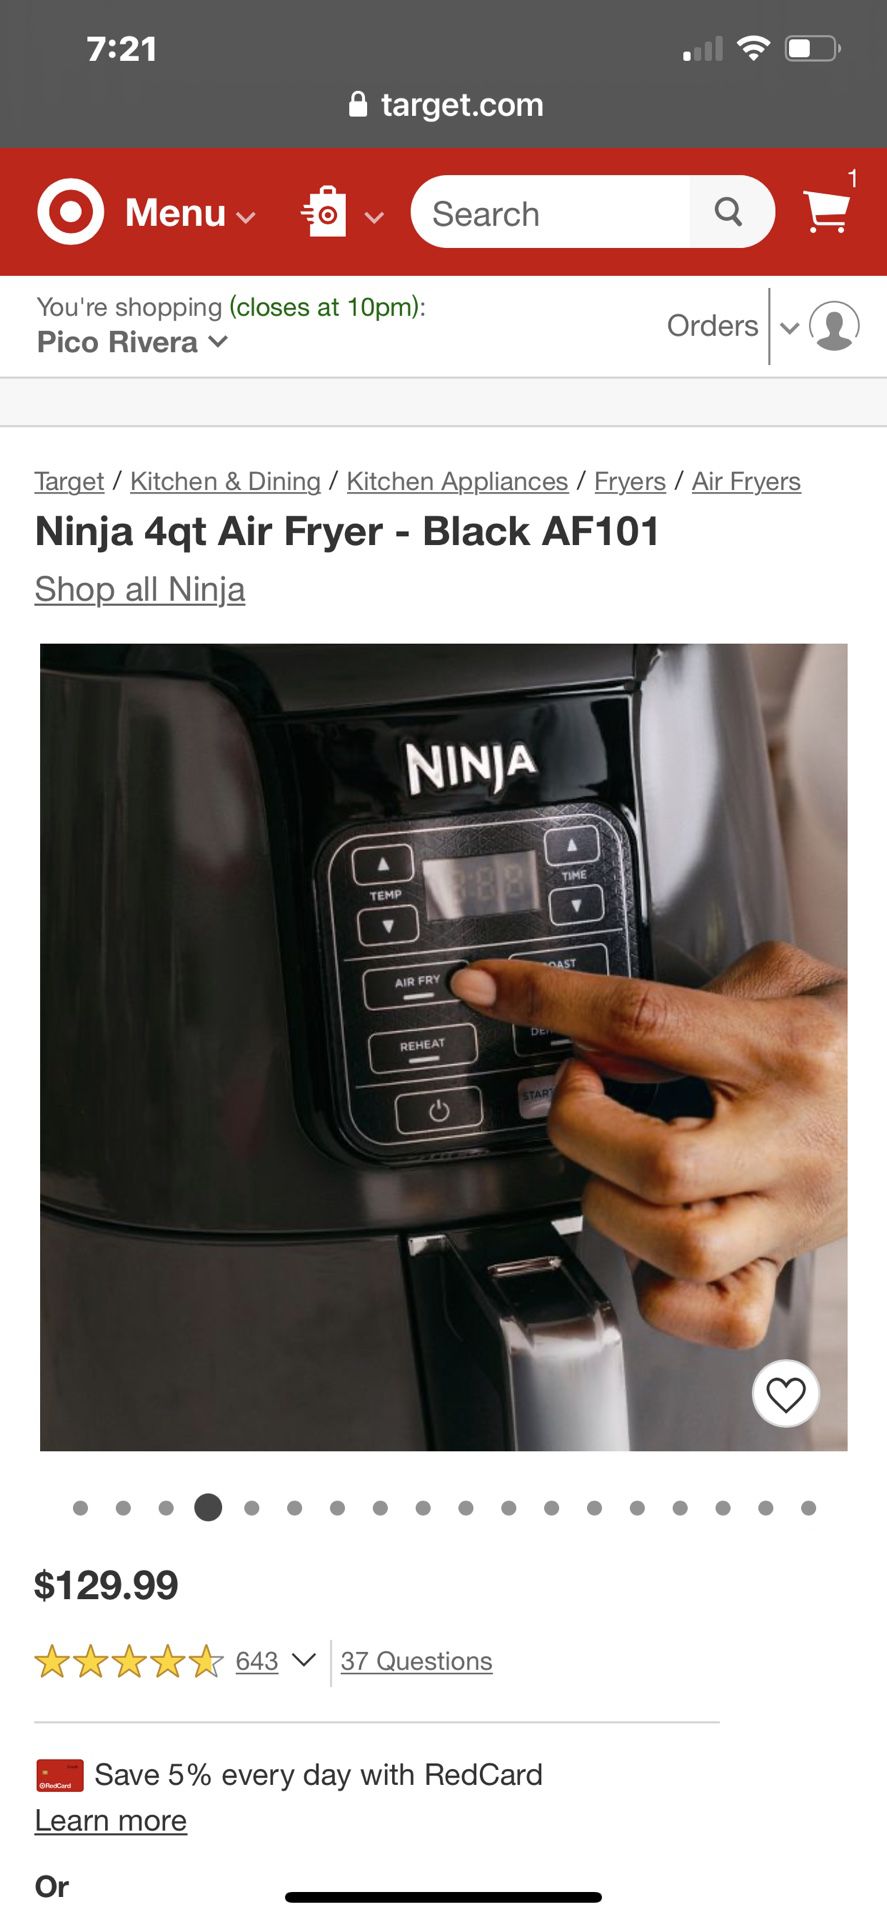 Innsky Air Fryer for Sale in San Diego, CA - OfferUp